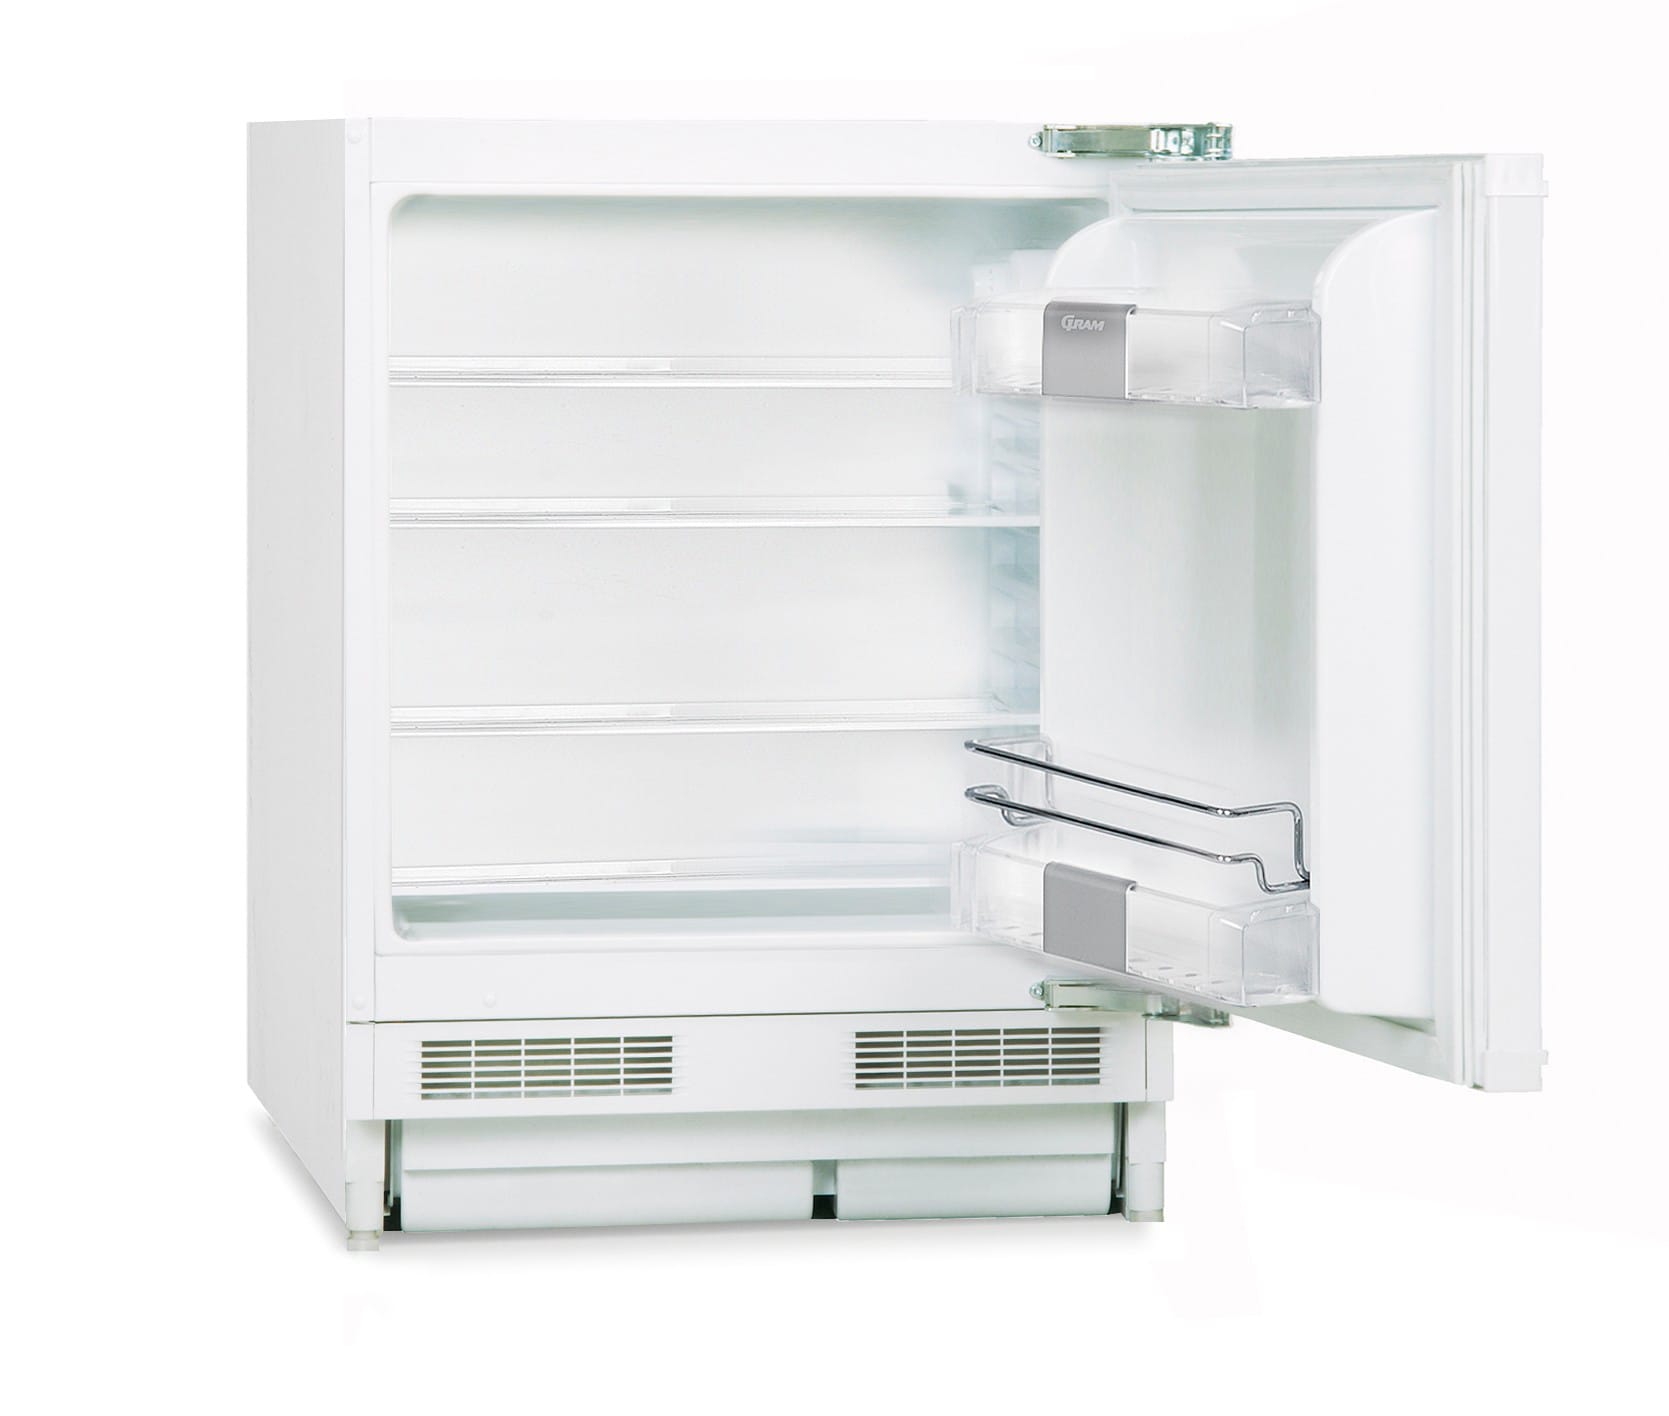 Gram jääkaappi KSU 3136-50 (82 cm) - Gigantti verkkokauppa